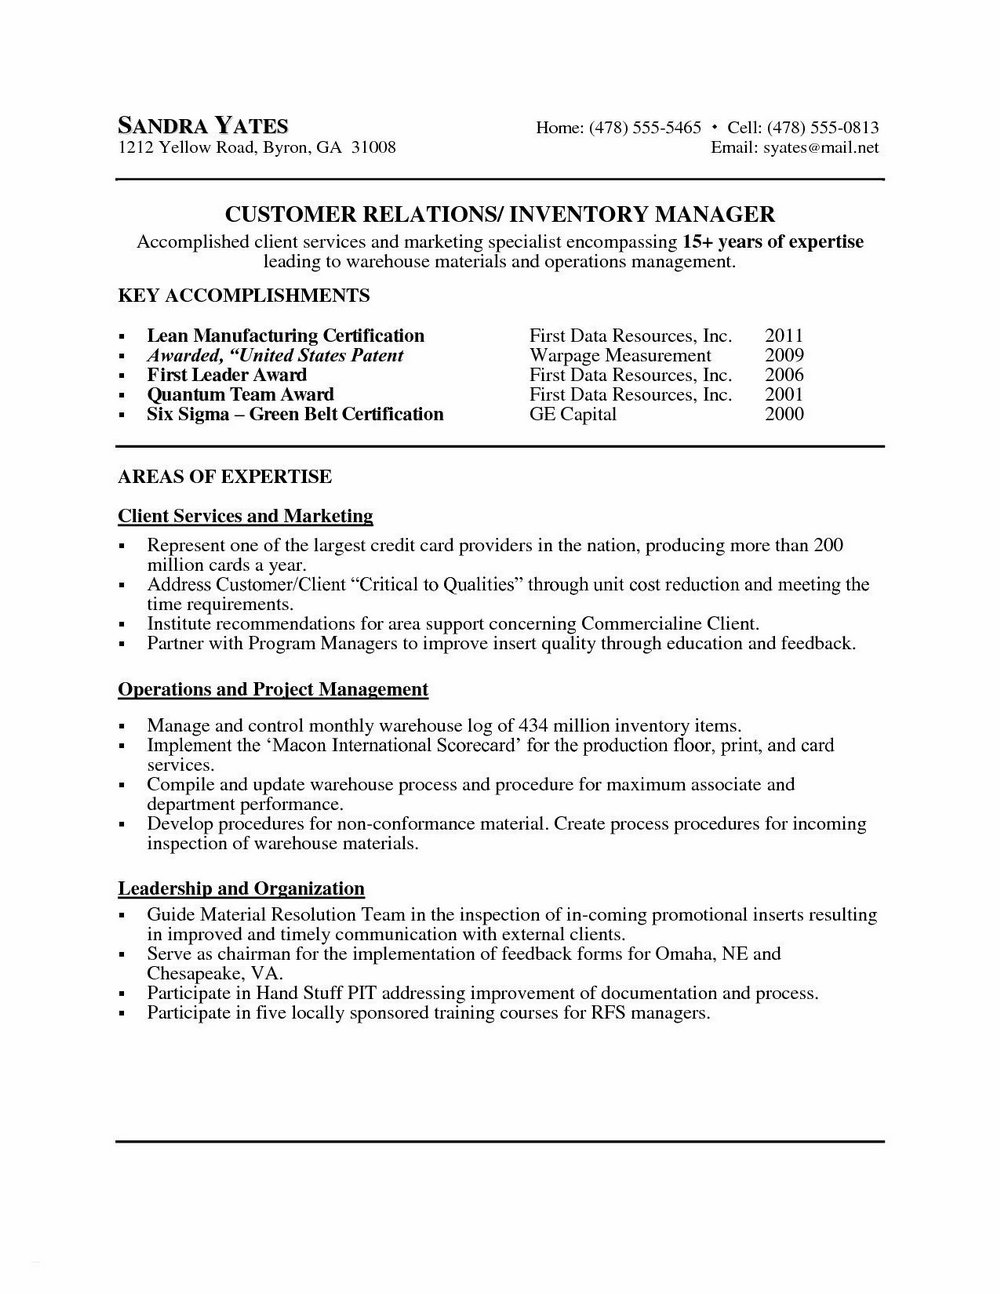 Free veteran resume writing services